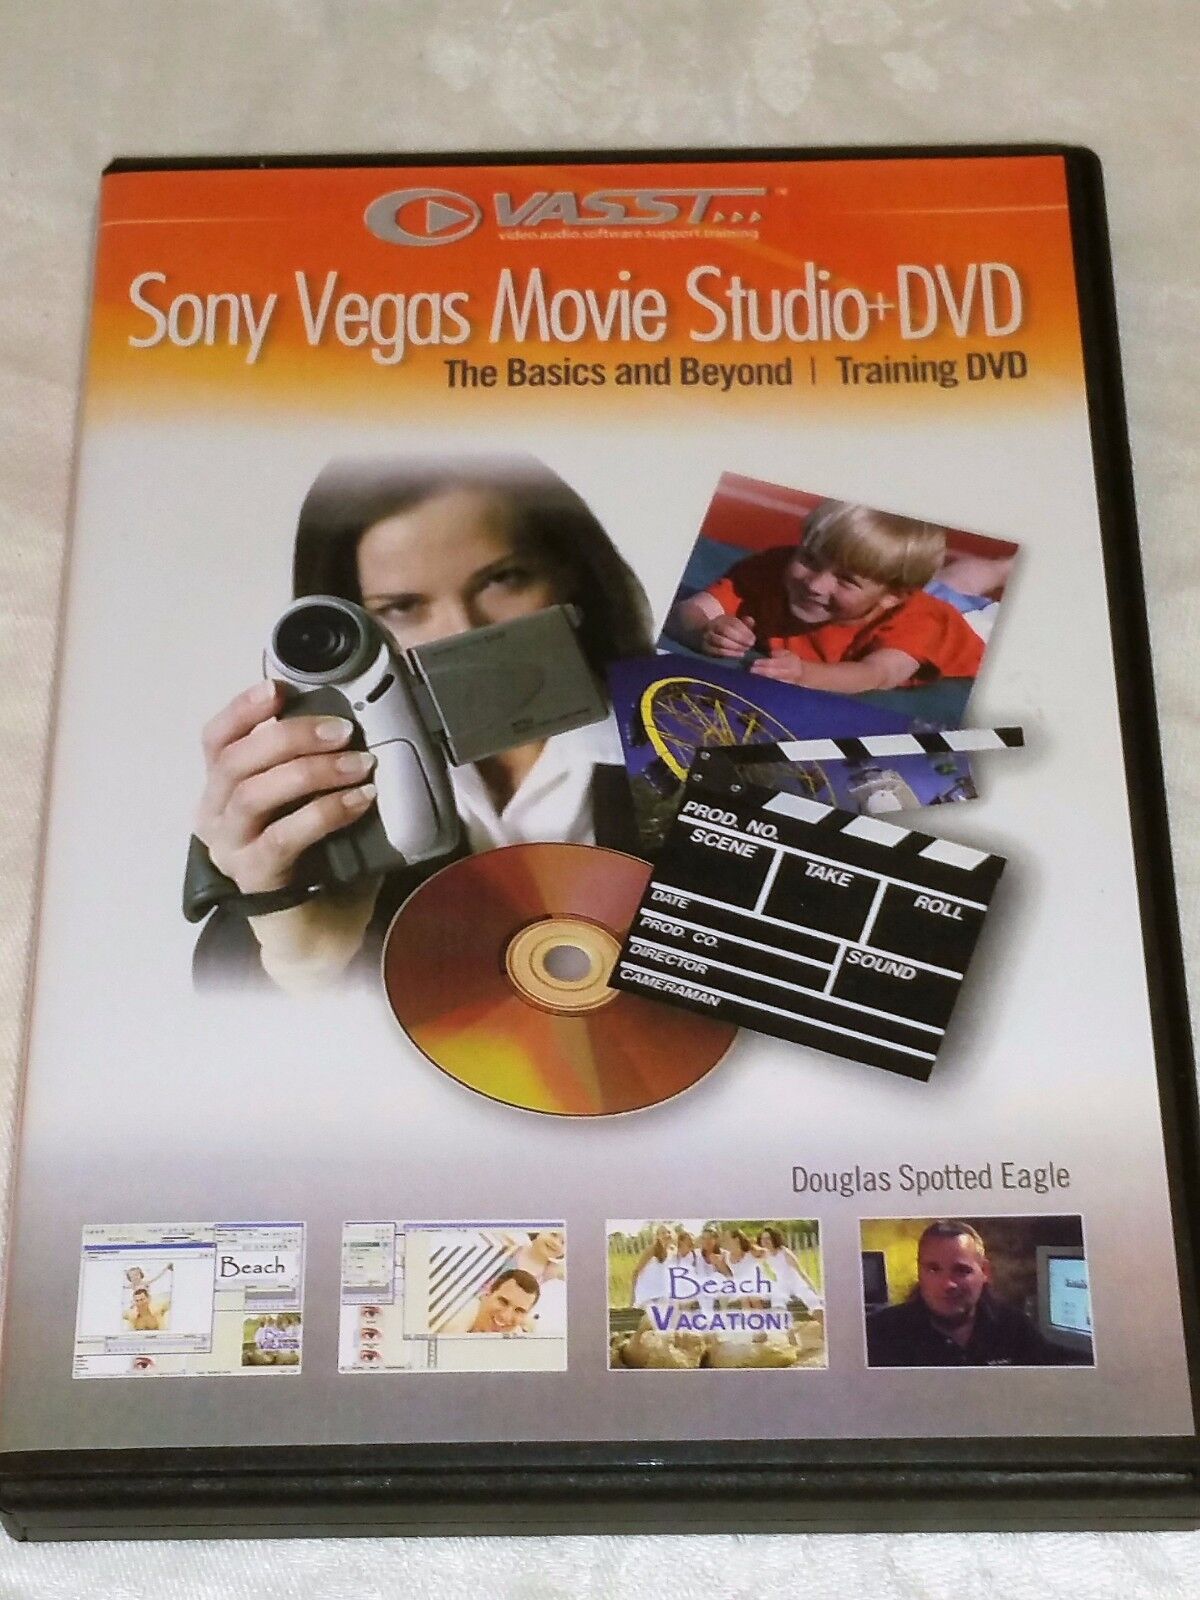 Sony Vegas Movie Studio TRAINING DVD by Douglas Spotted Eagle